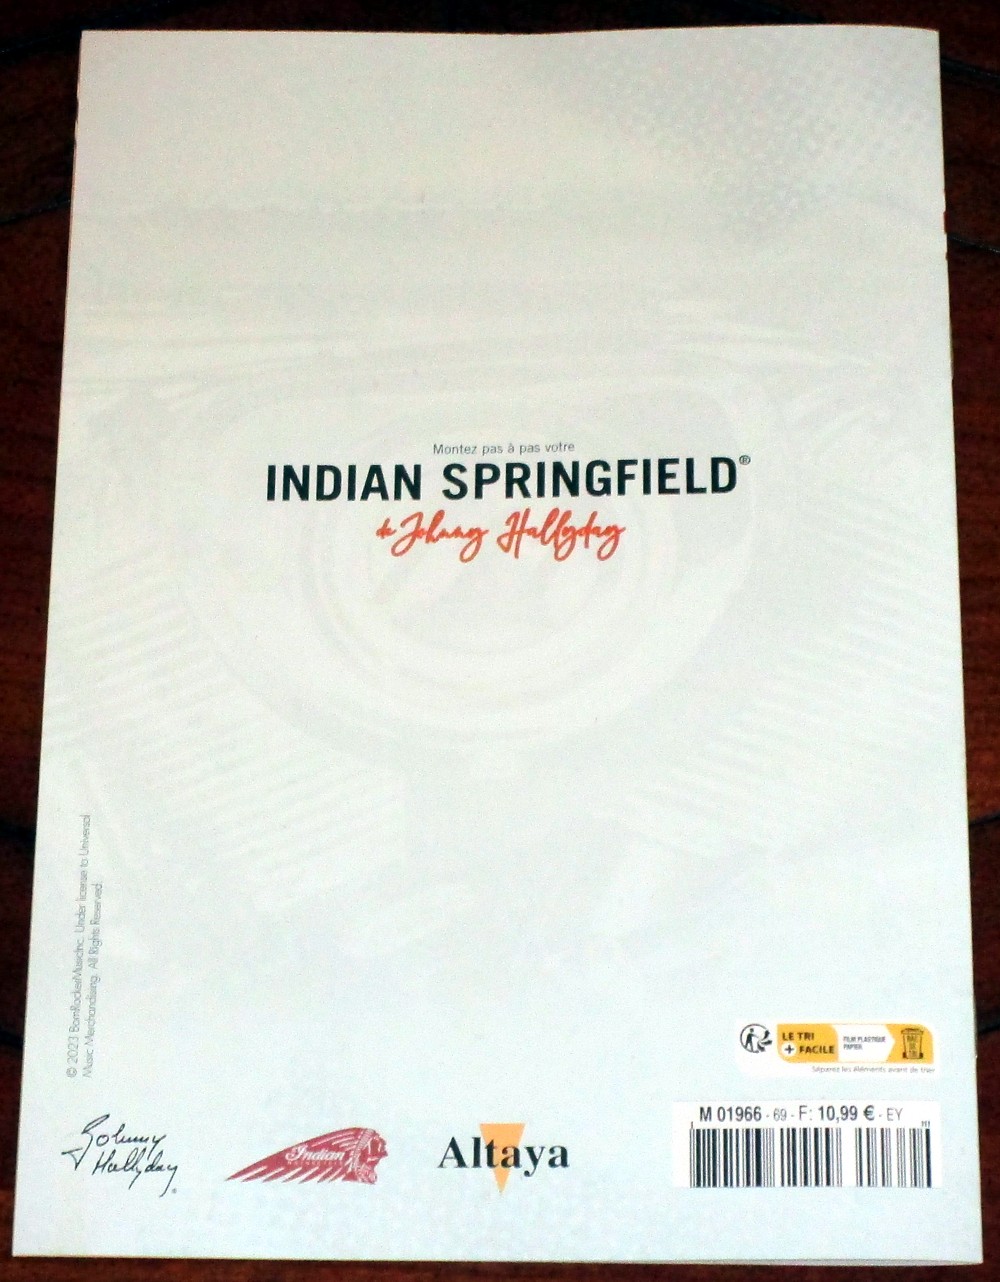 Altaya:Indian Springfield de JH n°69 022-a190